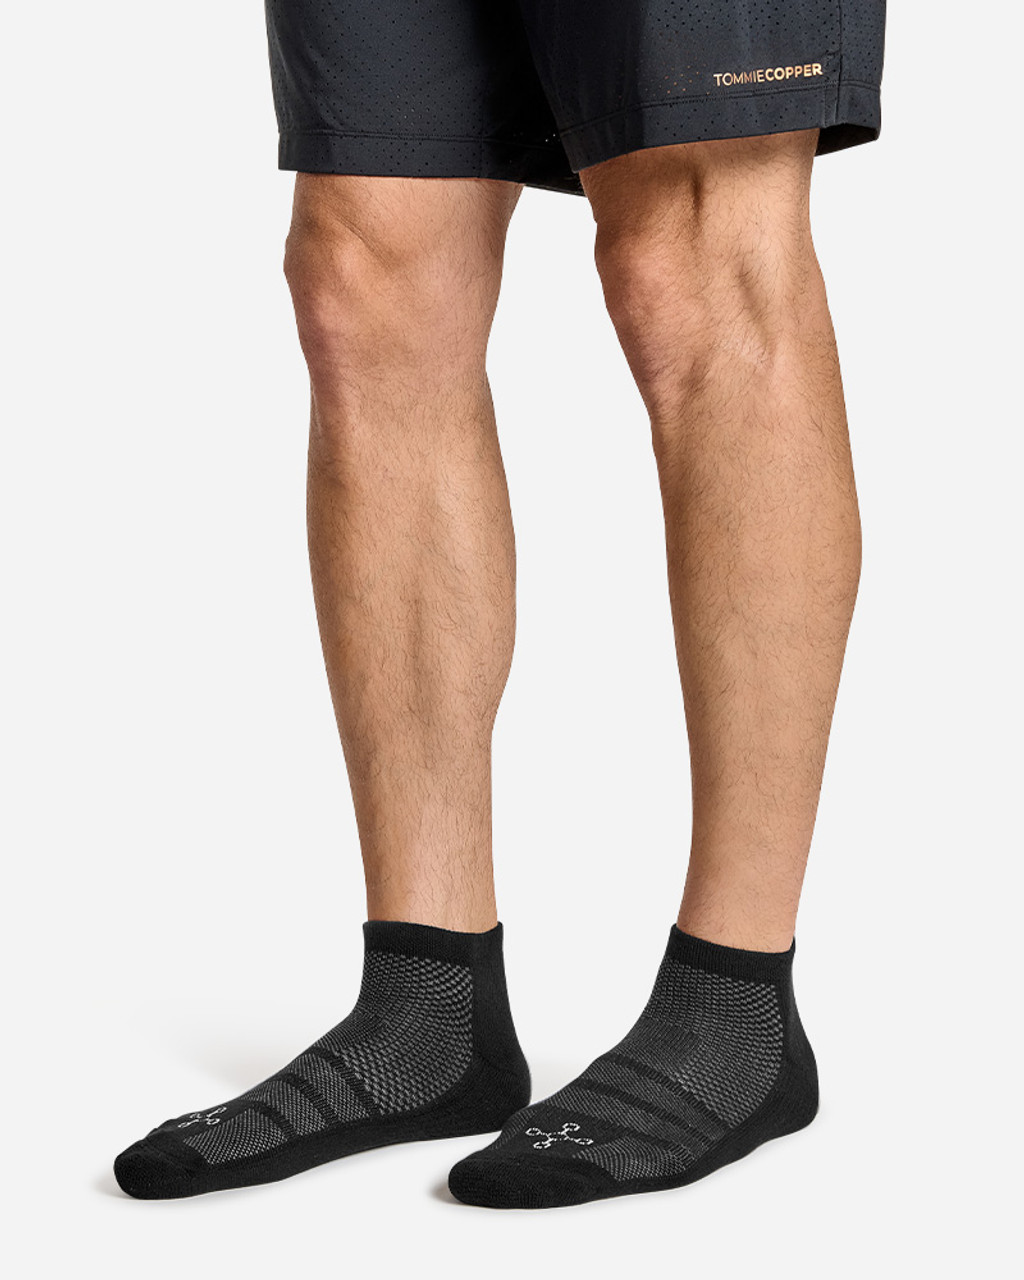 Wisremt Compression Socks Men Leg Support Stretch Cotton Soft Compression  Relief Socks calcetines de compresion hombre